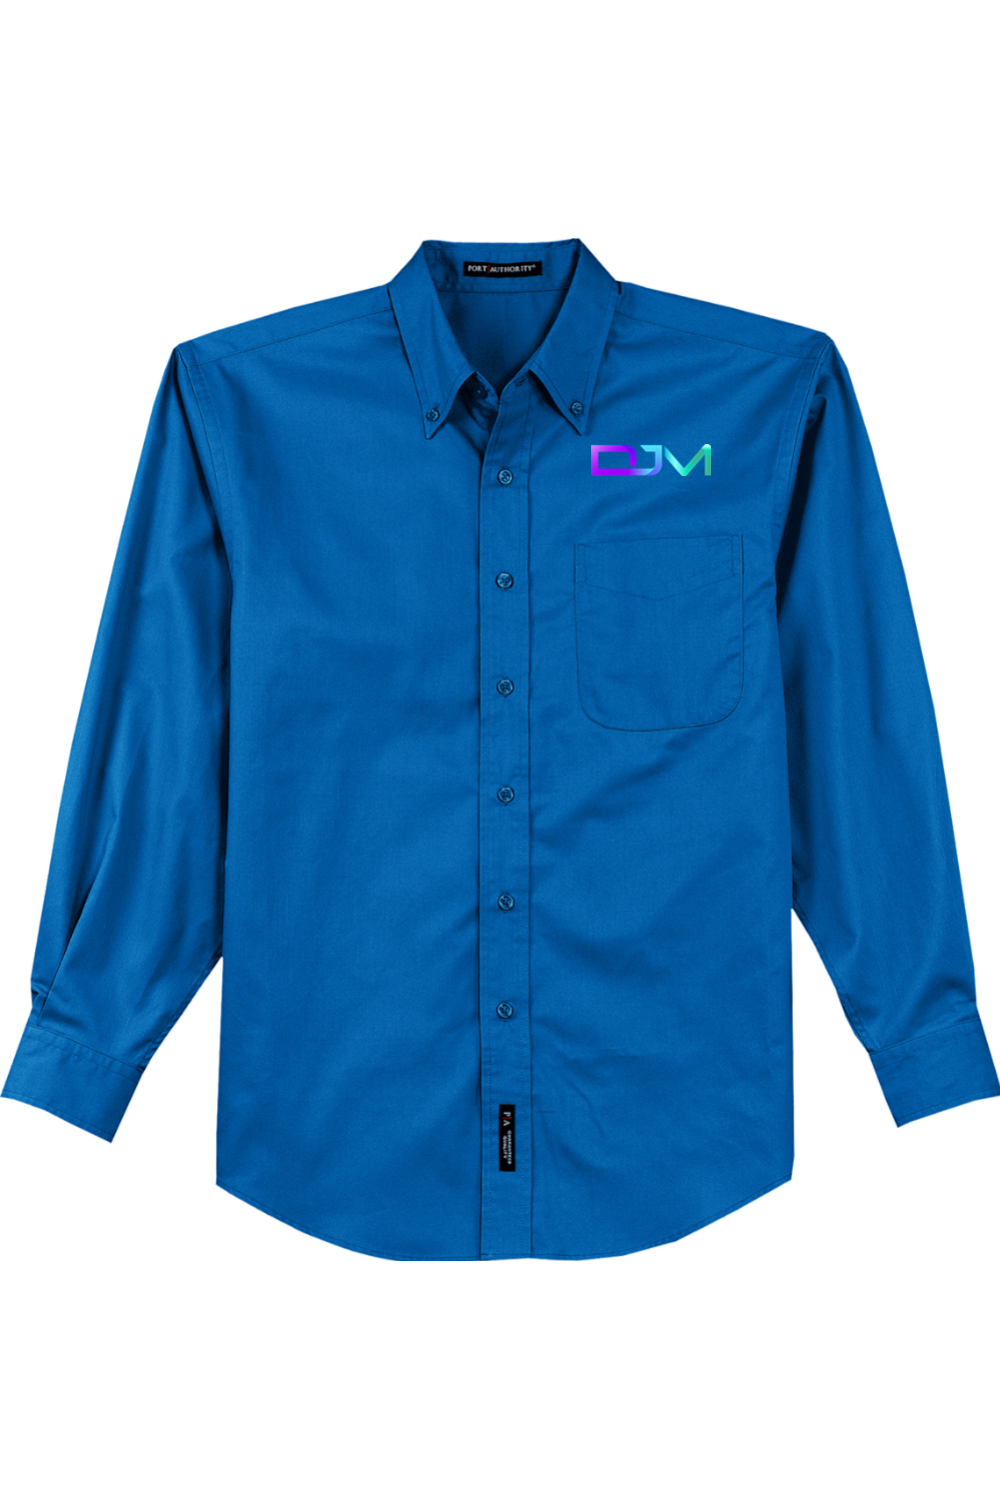 DJM.Design™  Long Sleeve Dress Shirt (Ai Workshop 3K Leads Access) 450 Points